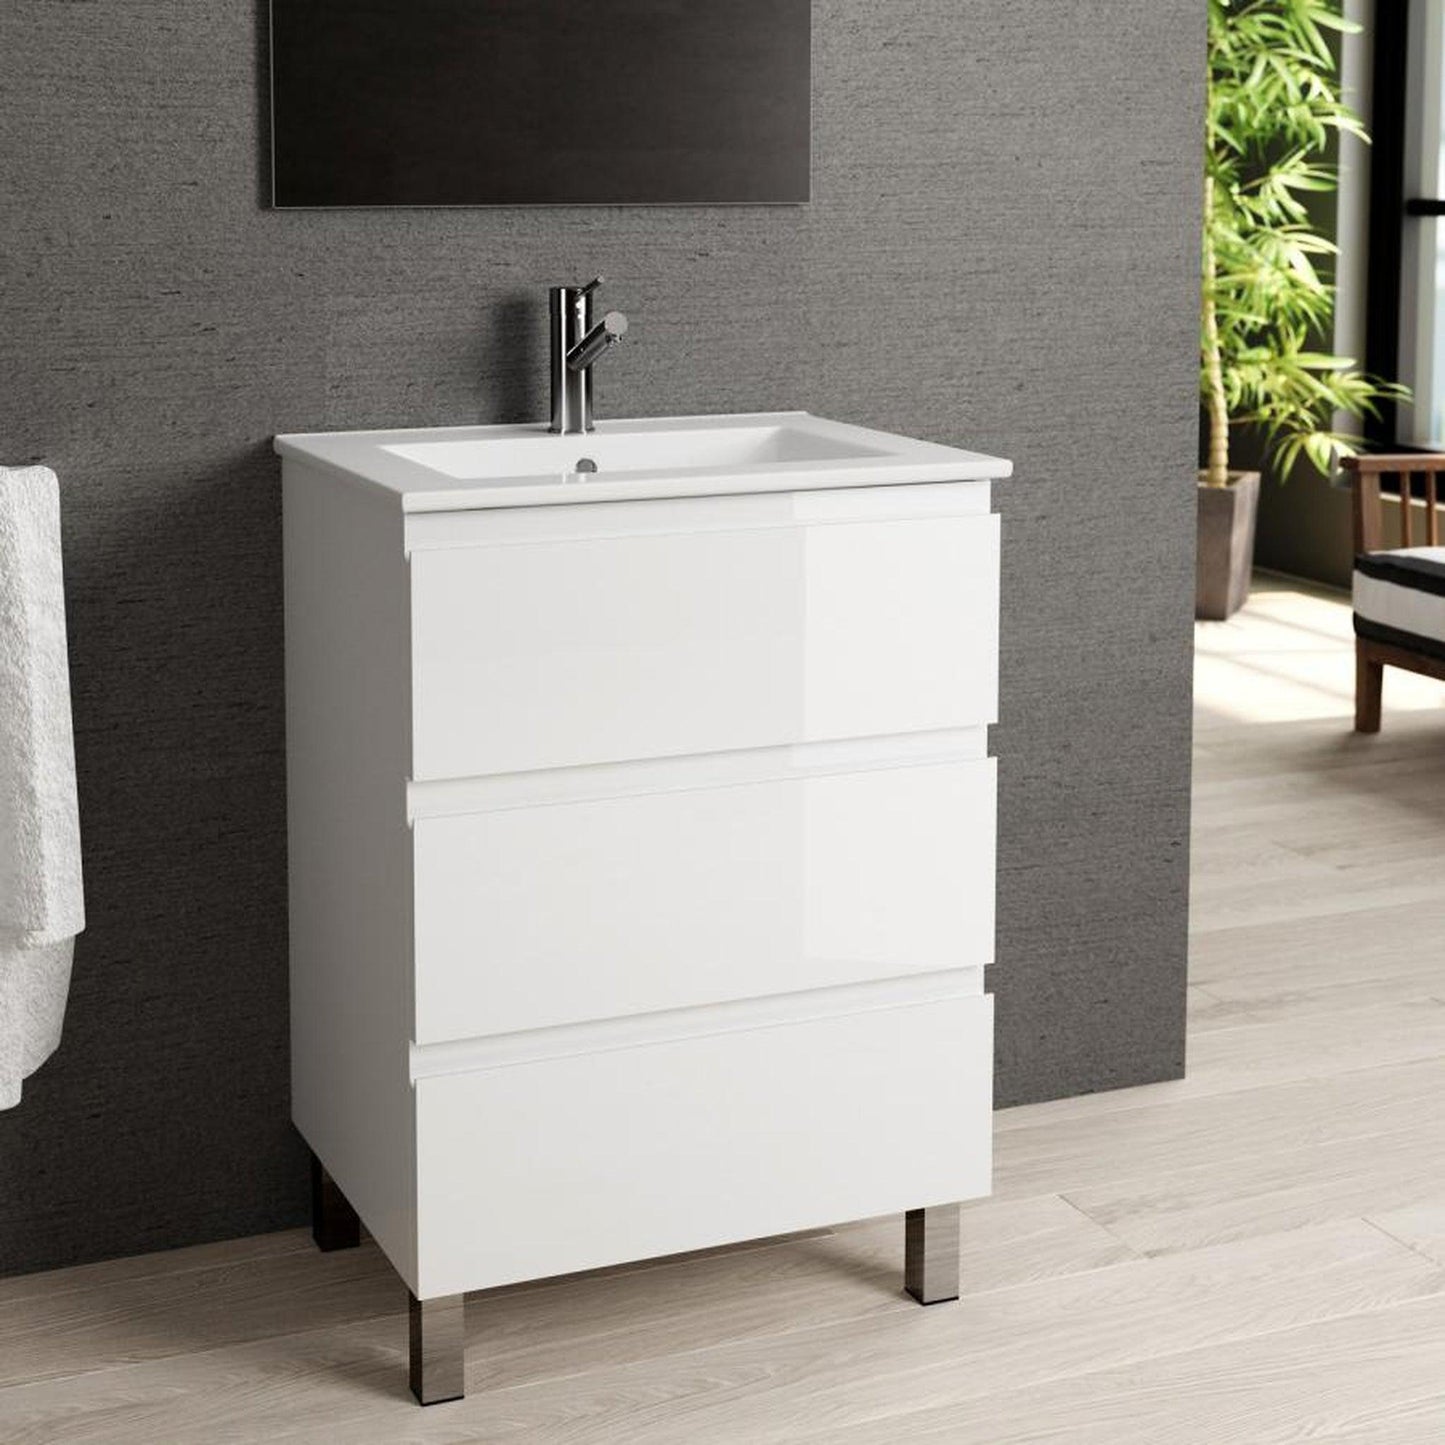 Eviva Vigo 24" x 34" White Freestanding Bathroom Vanity With White Integrated Porcelain Sink